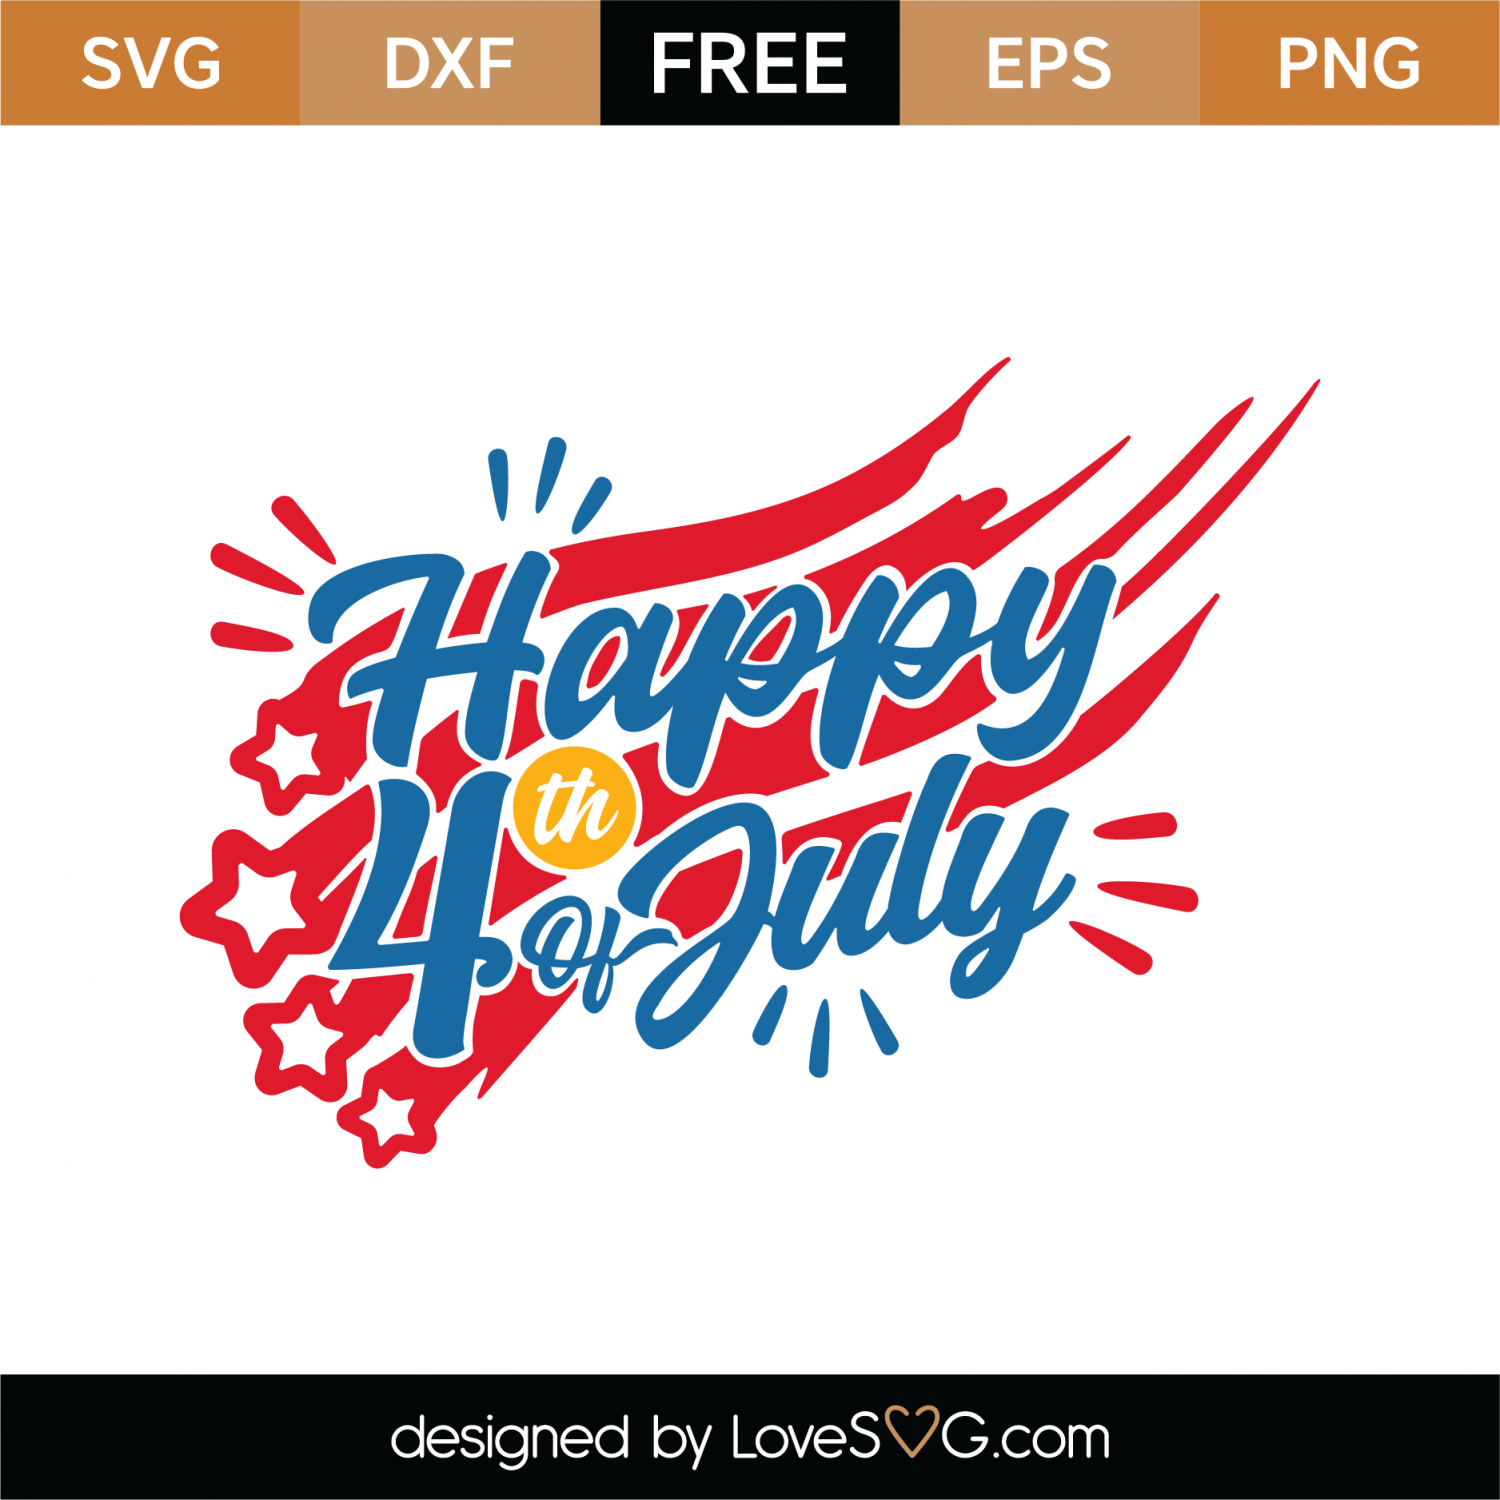 Download Free Happy 4th of July SVG Cut File | Lovesvg.com